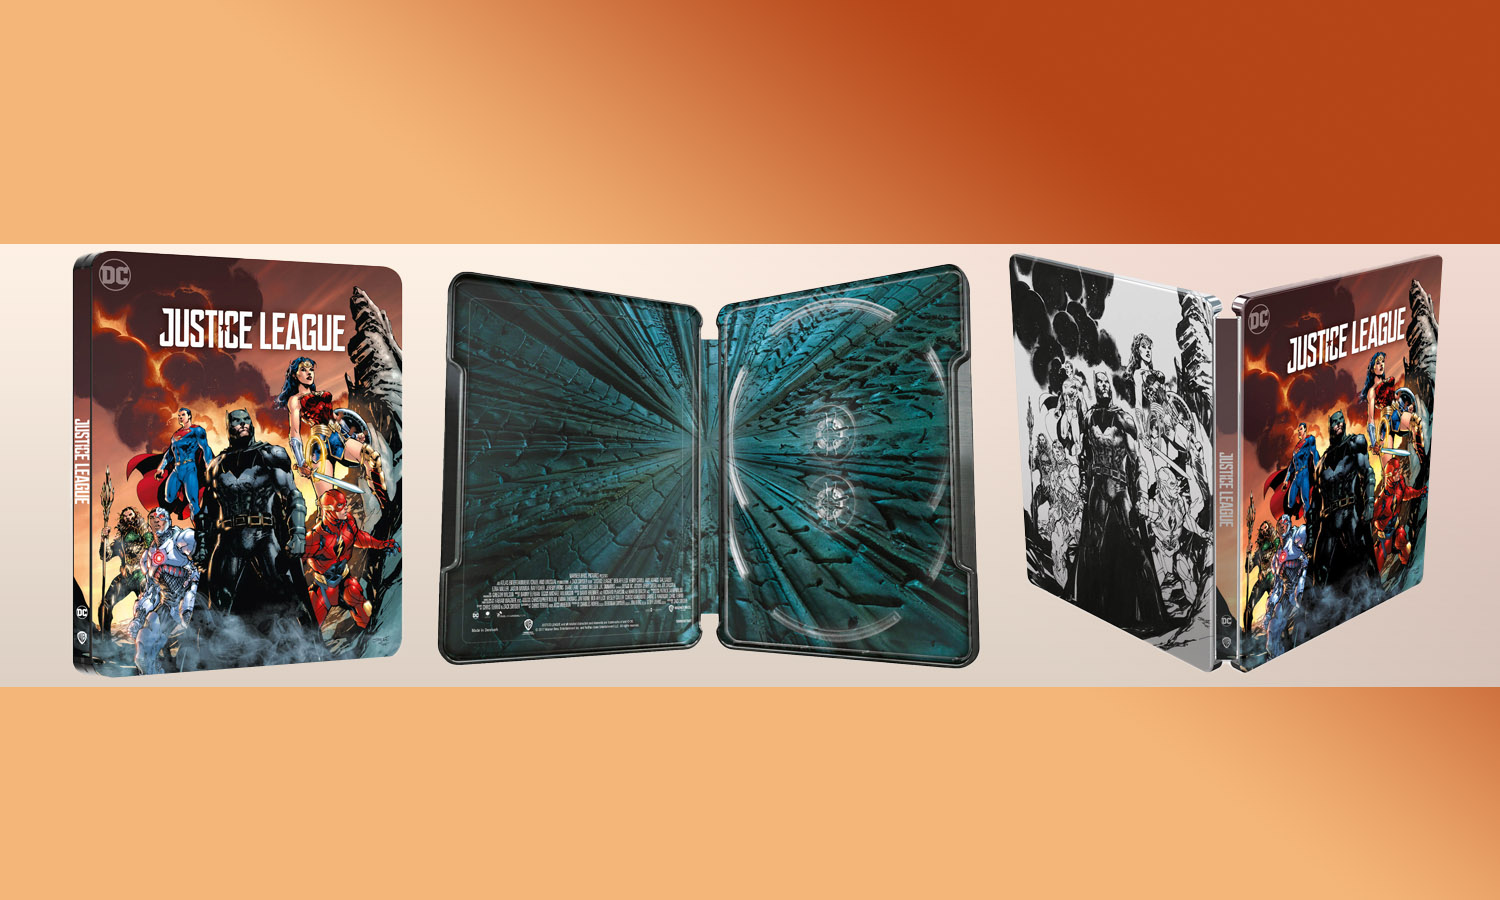 slider justice league blu ray 4k steelbook zavvi comic